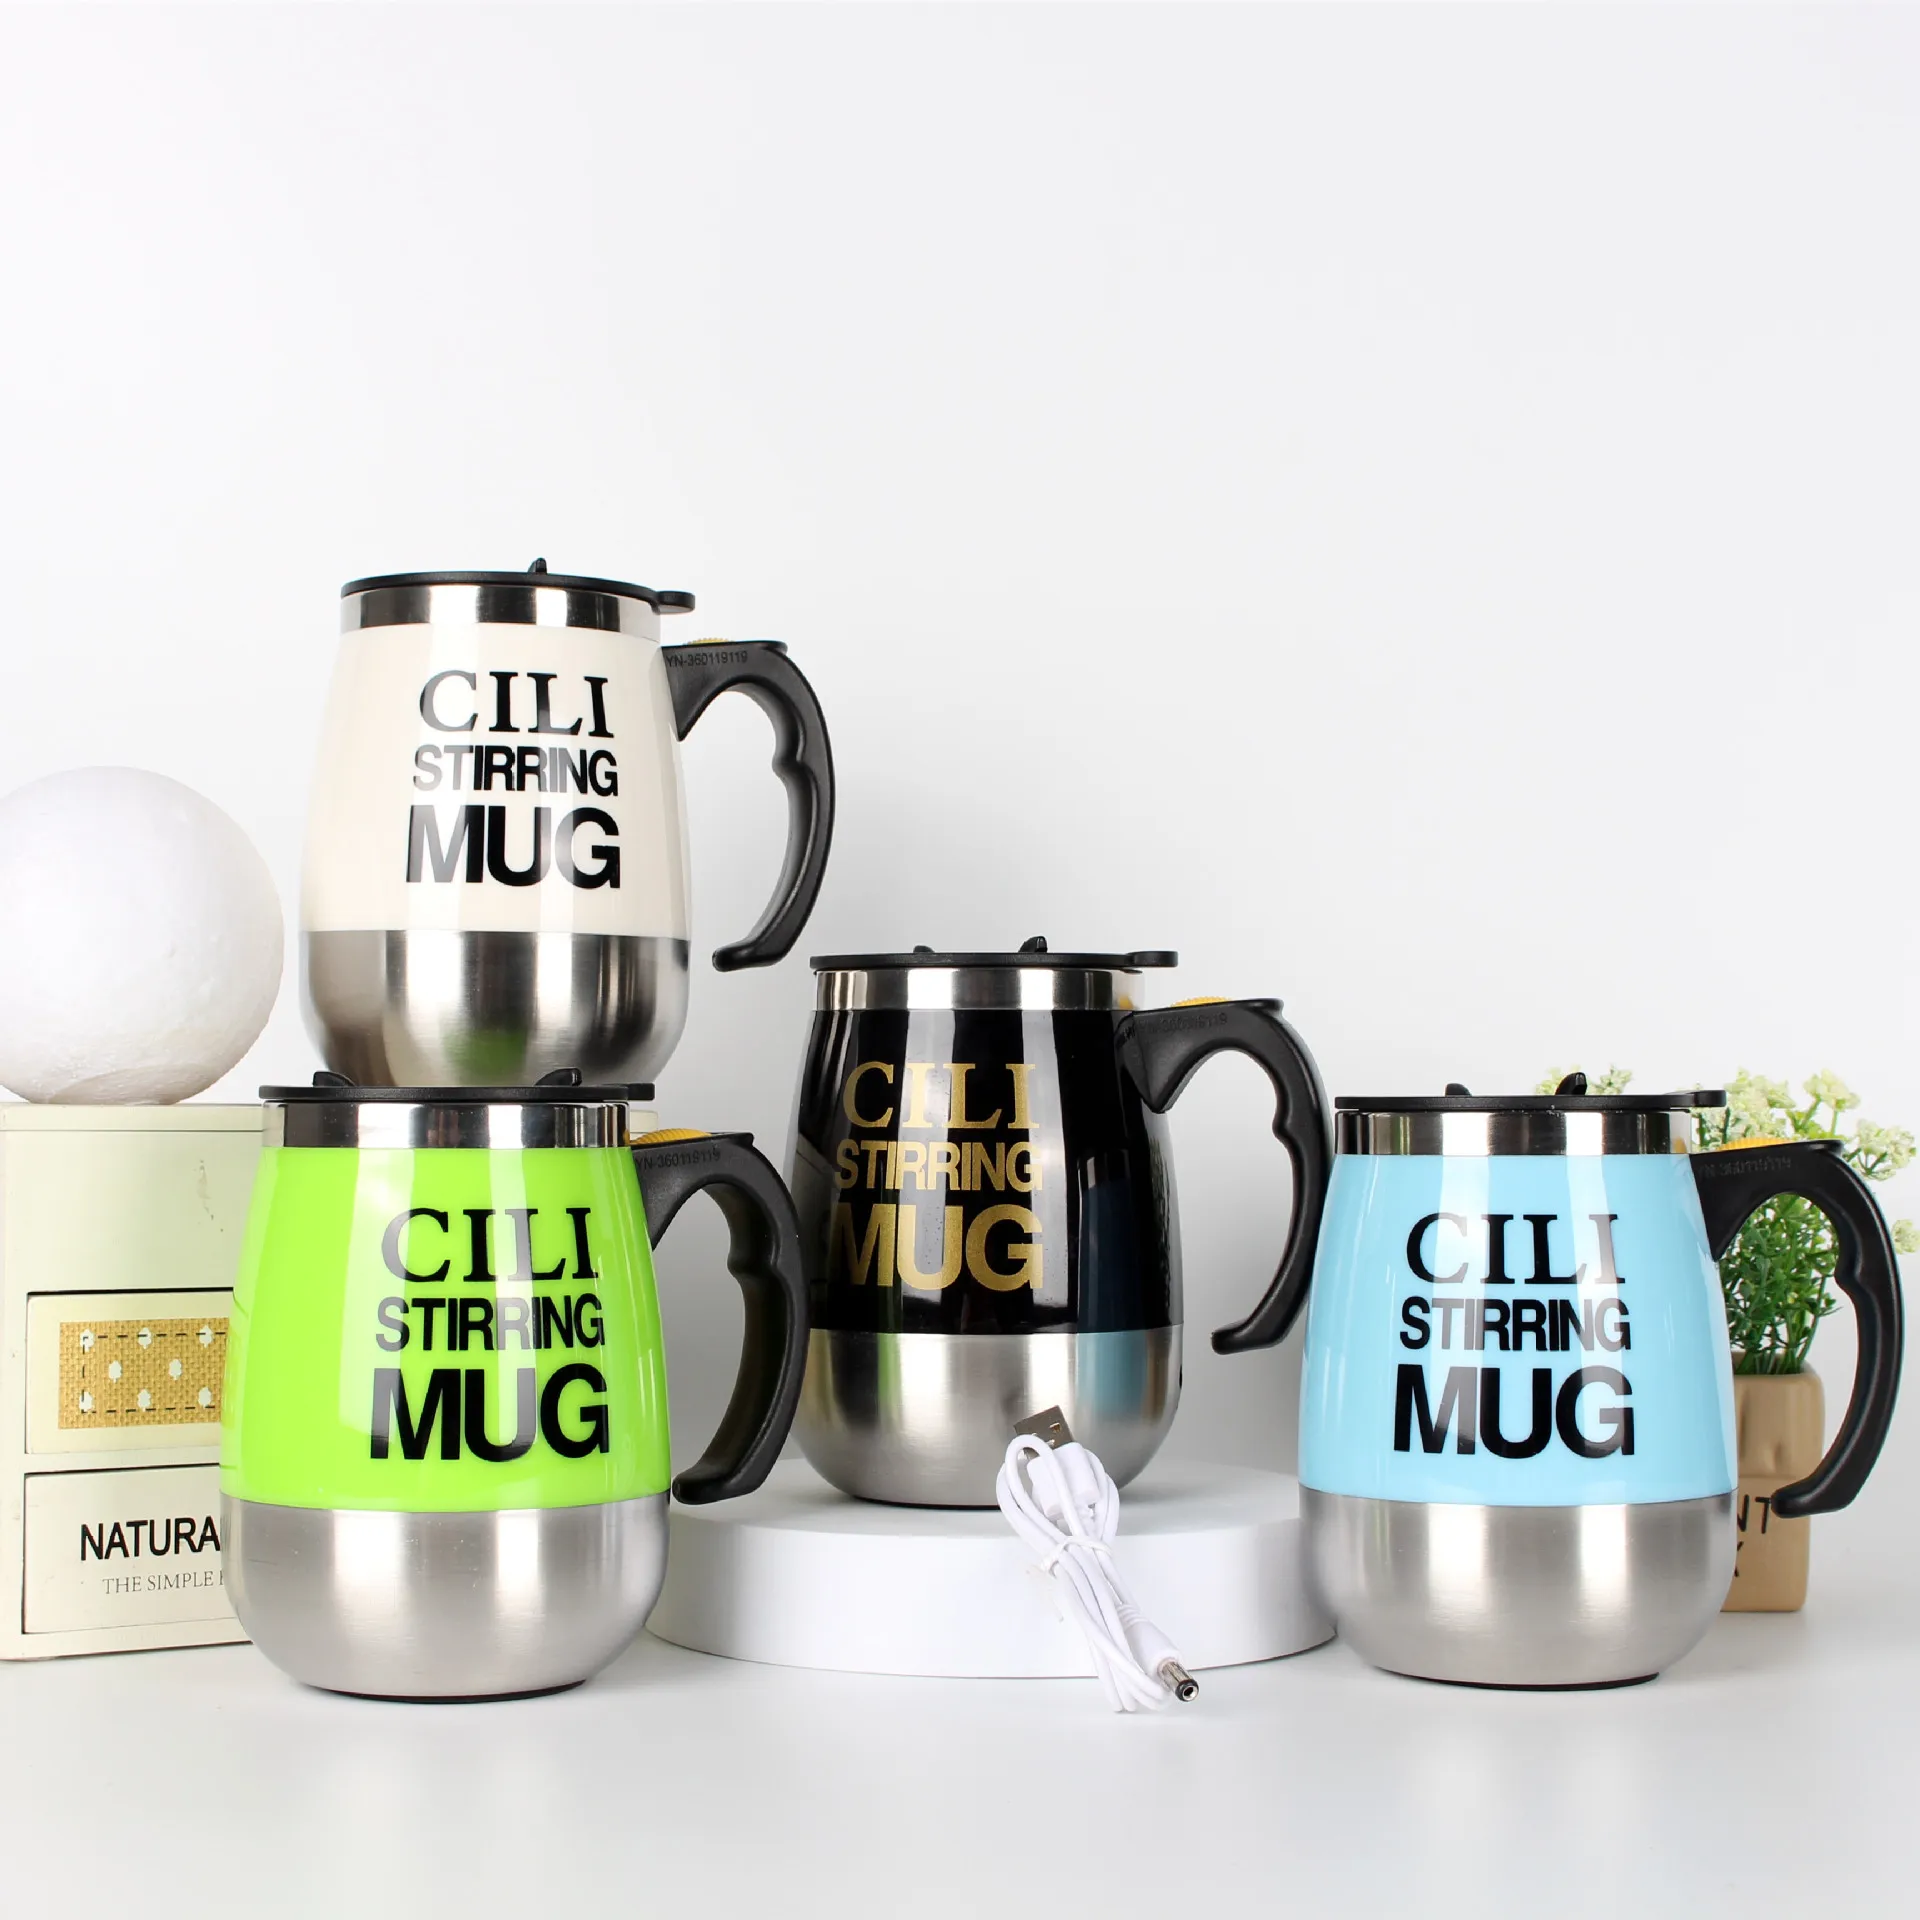 Self Stirring Mugs for sale